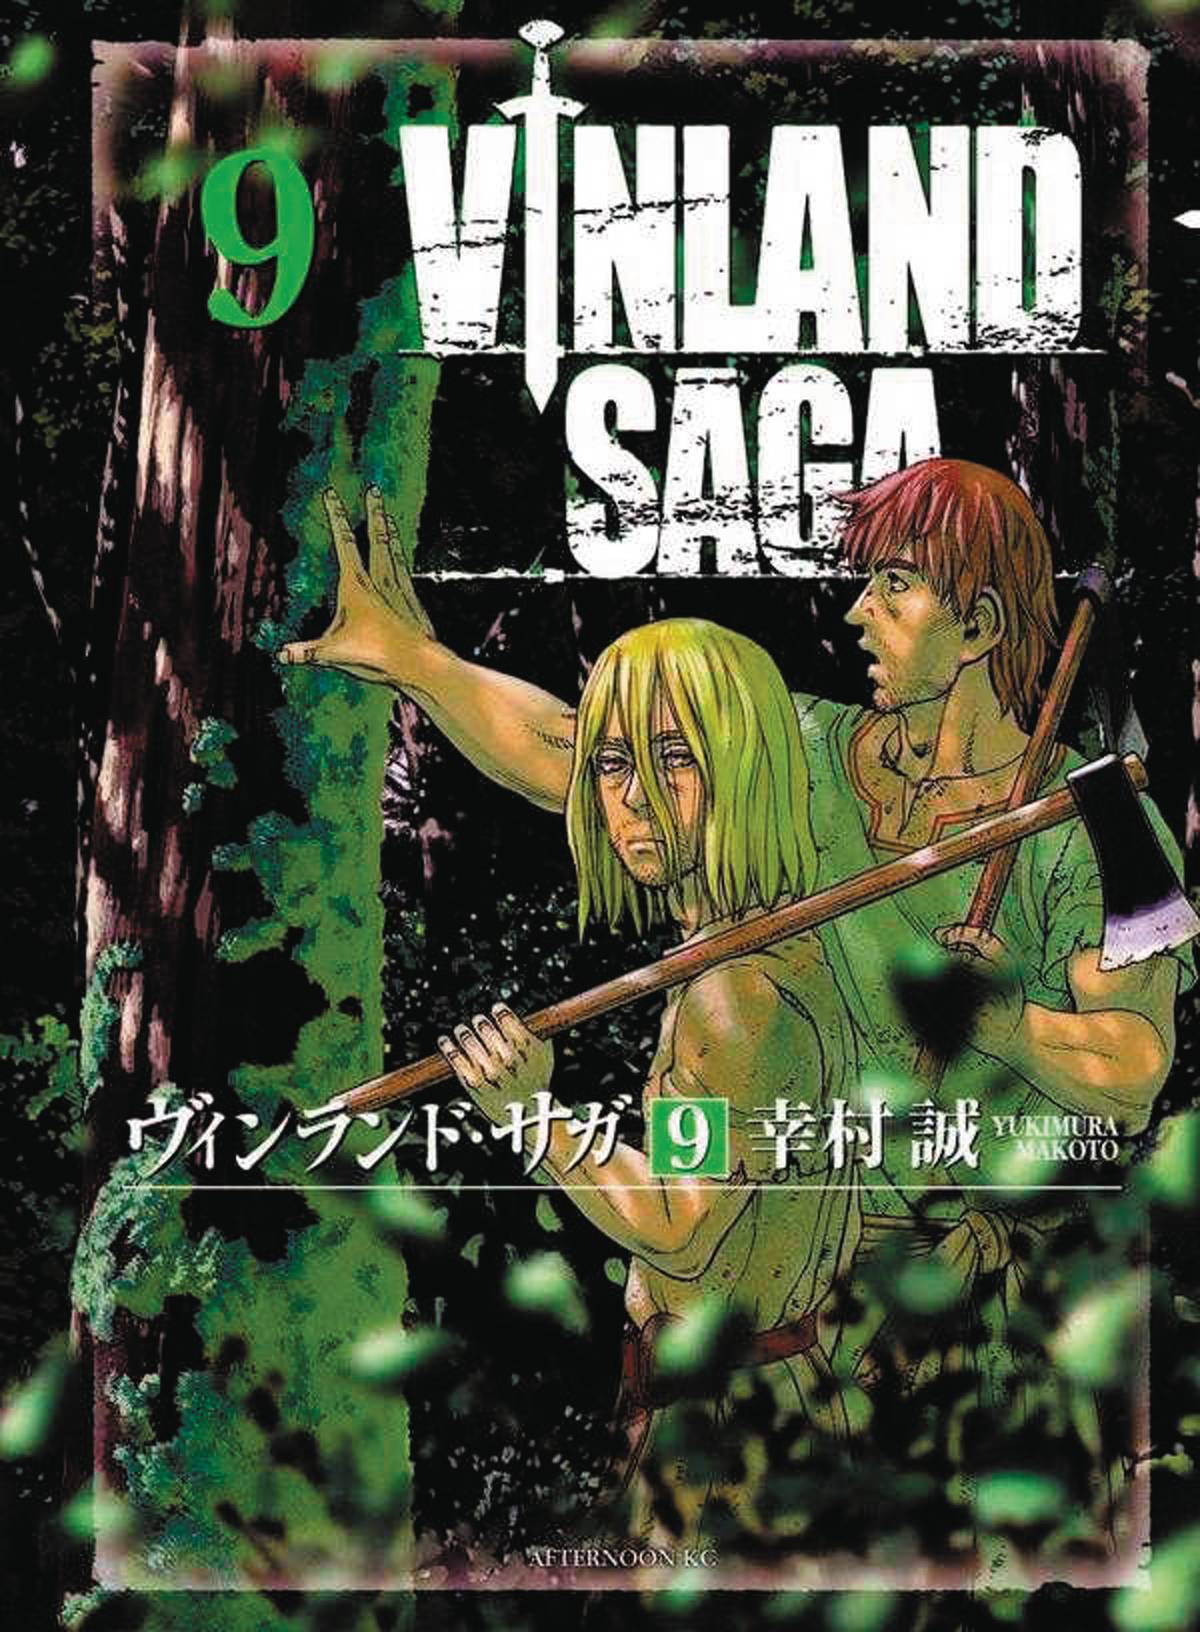 Second Season of Vinland Saga Has Been Green-lit